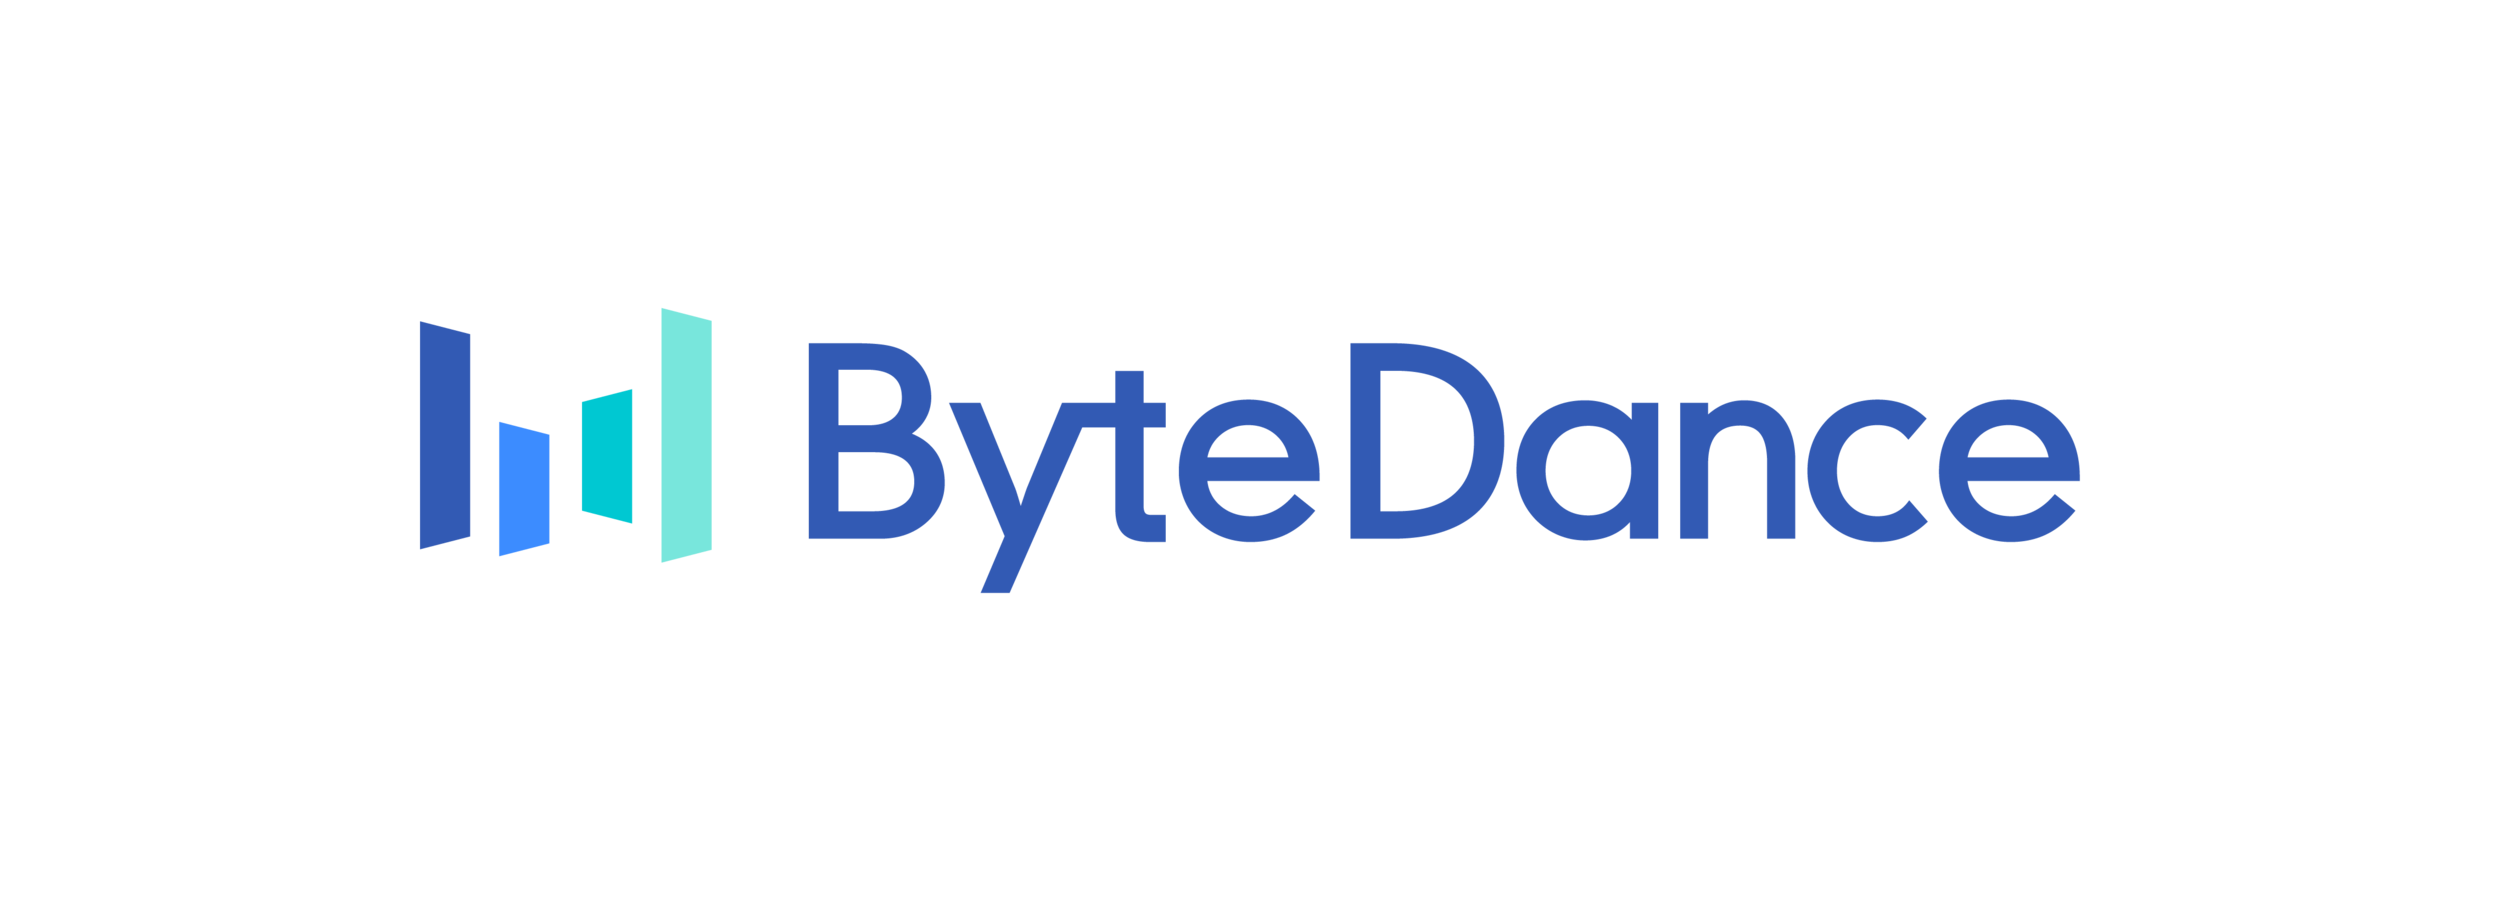 ByteDance-logo-RGB-fullcolor.png